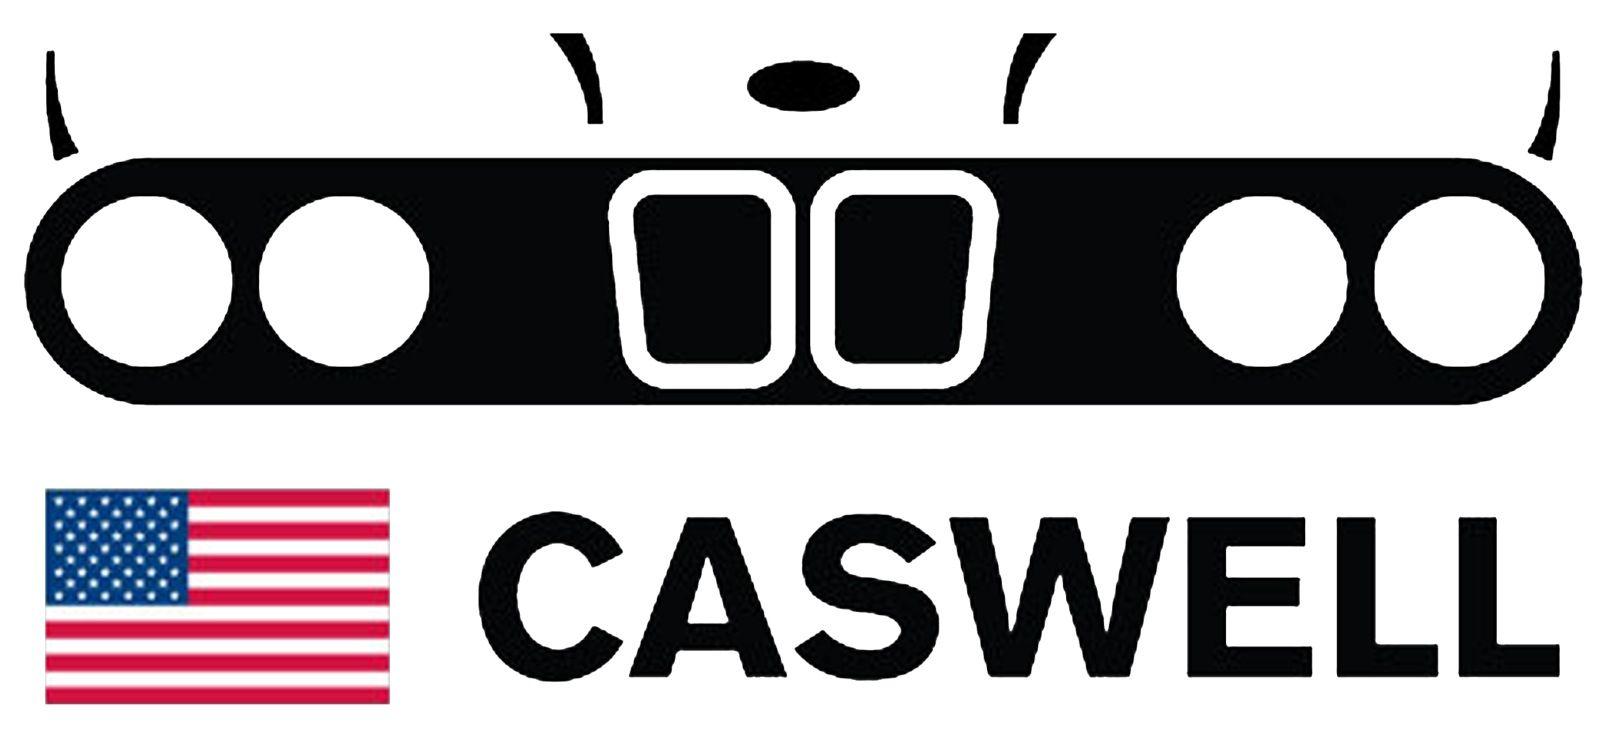 Caswell Logo - CASWELL MOTORSPORT LOGO